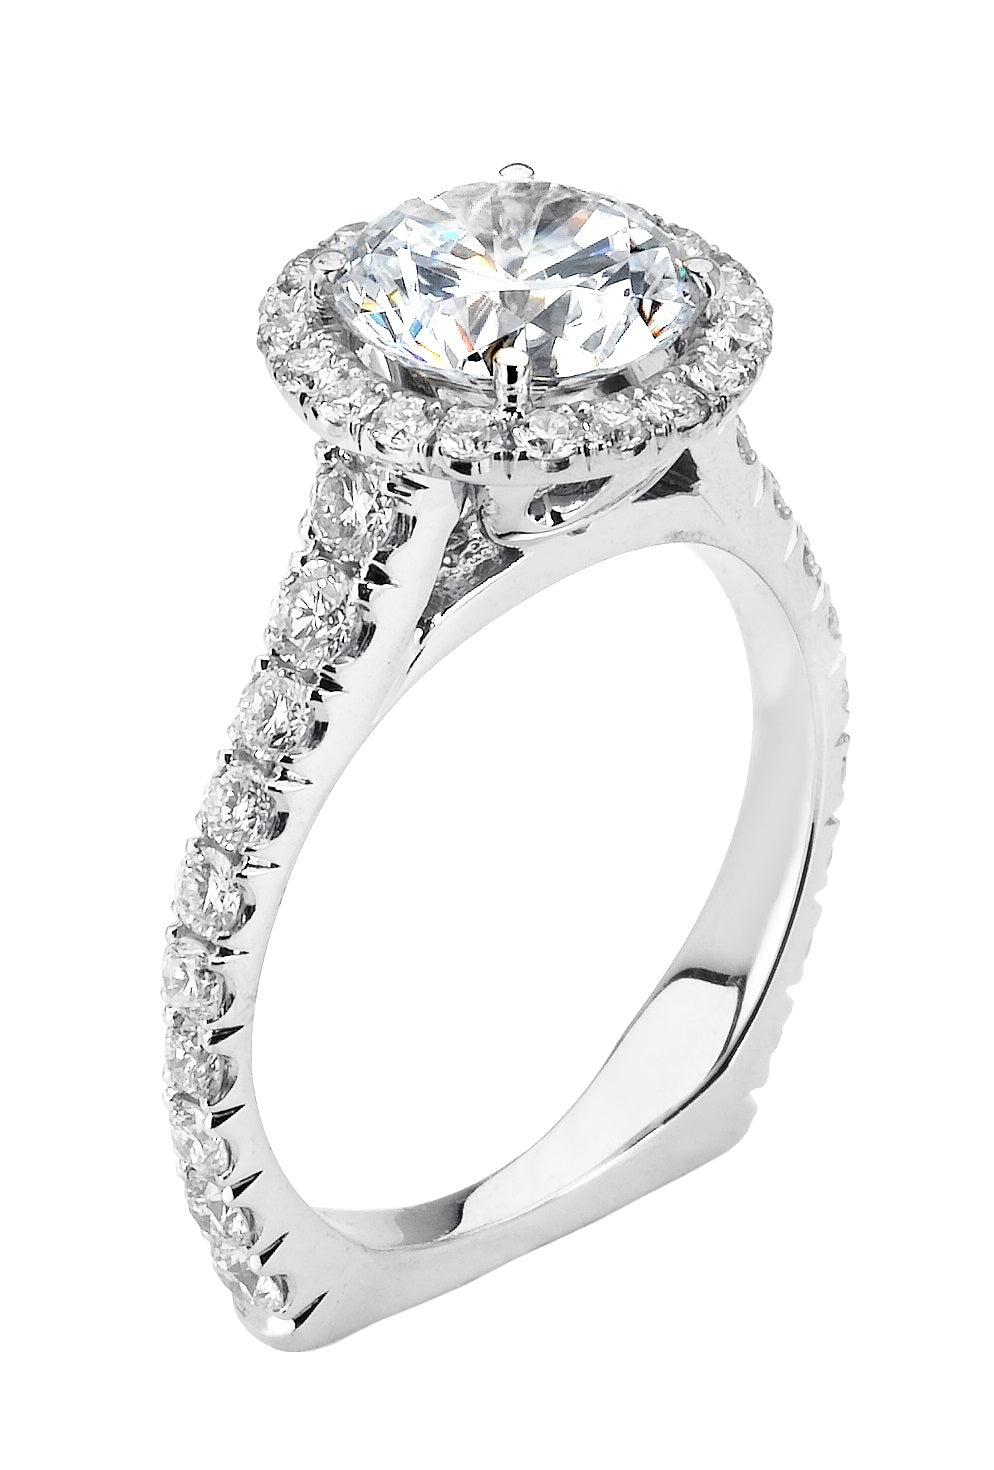 Michael M 18KWG Europa Diamond Engagement Ring Setting